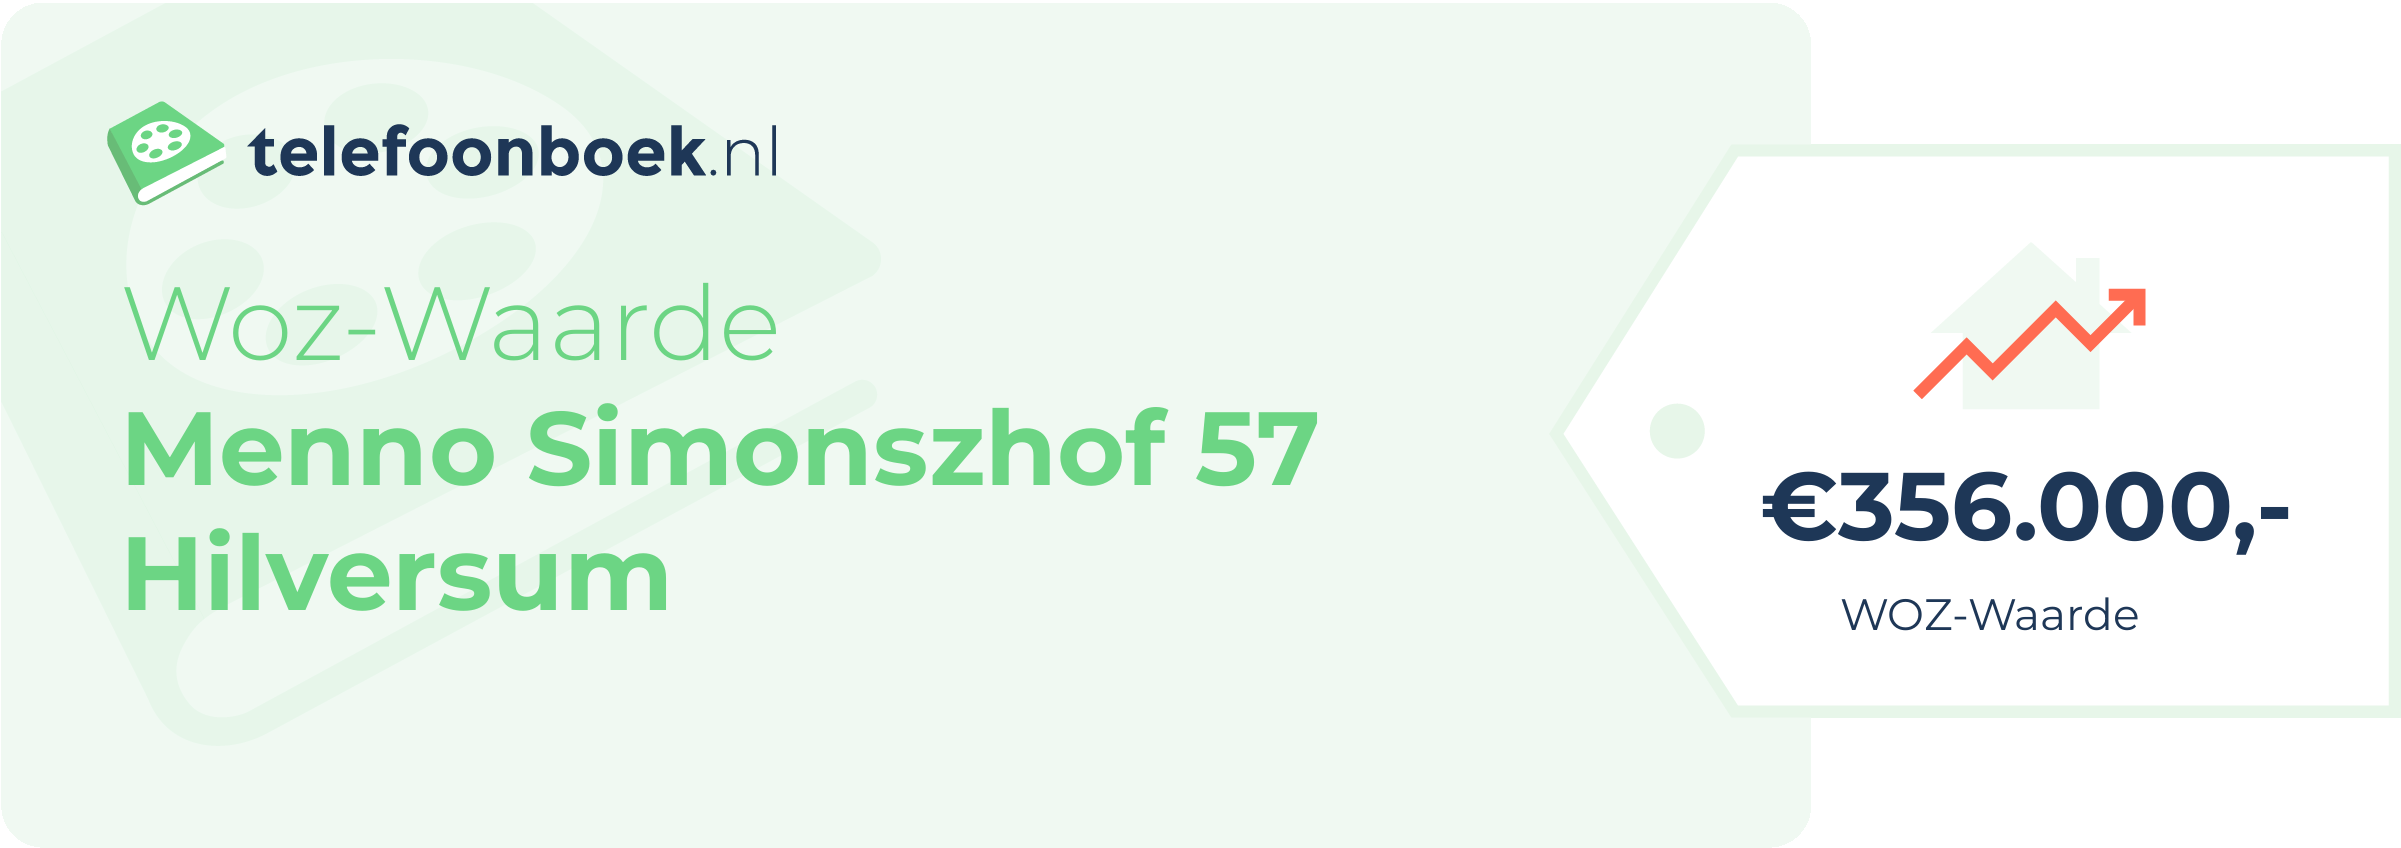 WOZ-waarde Menno Simonszhof 57 Hilversum